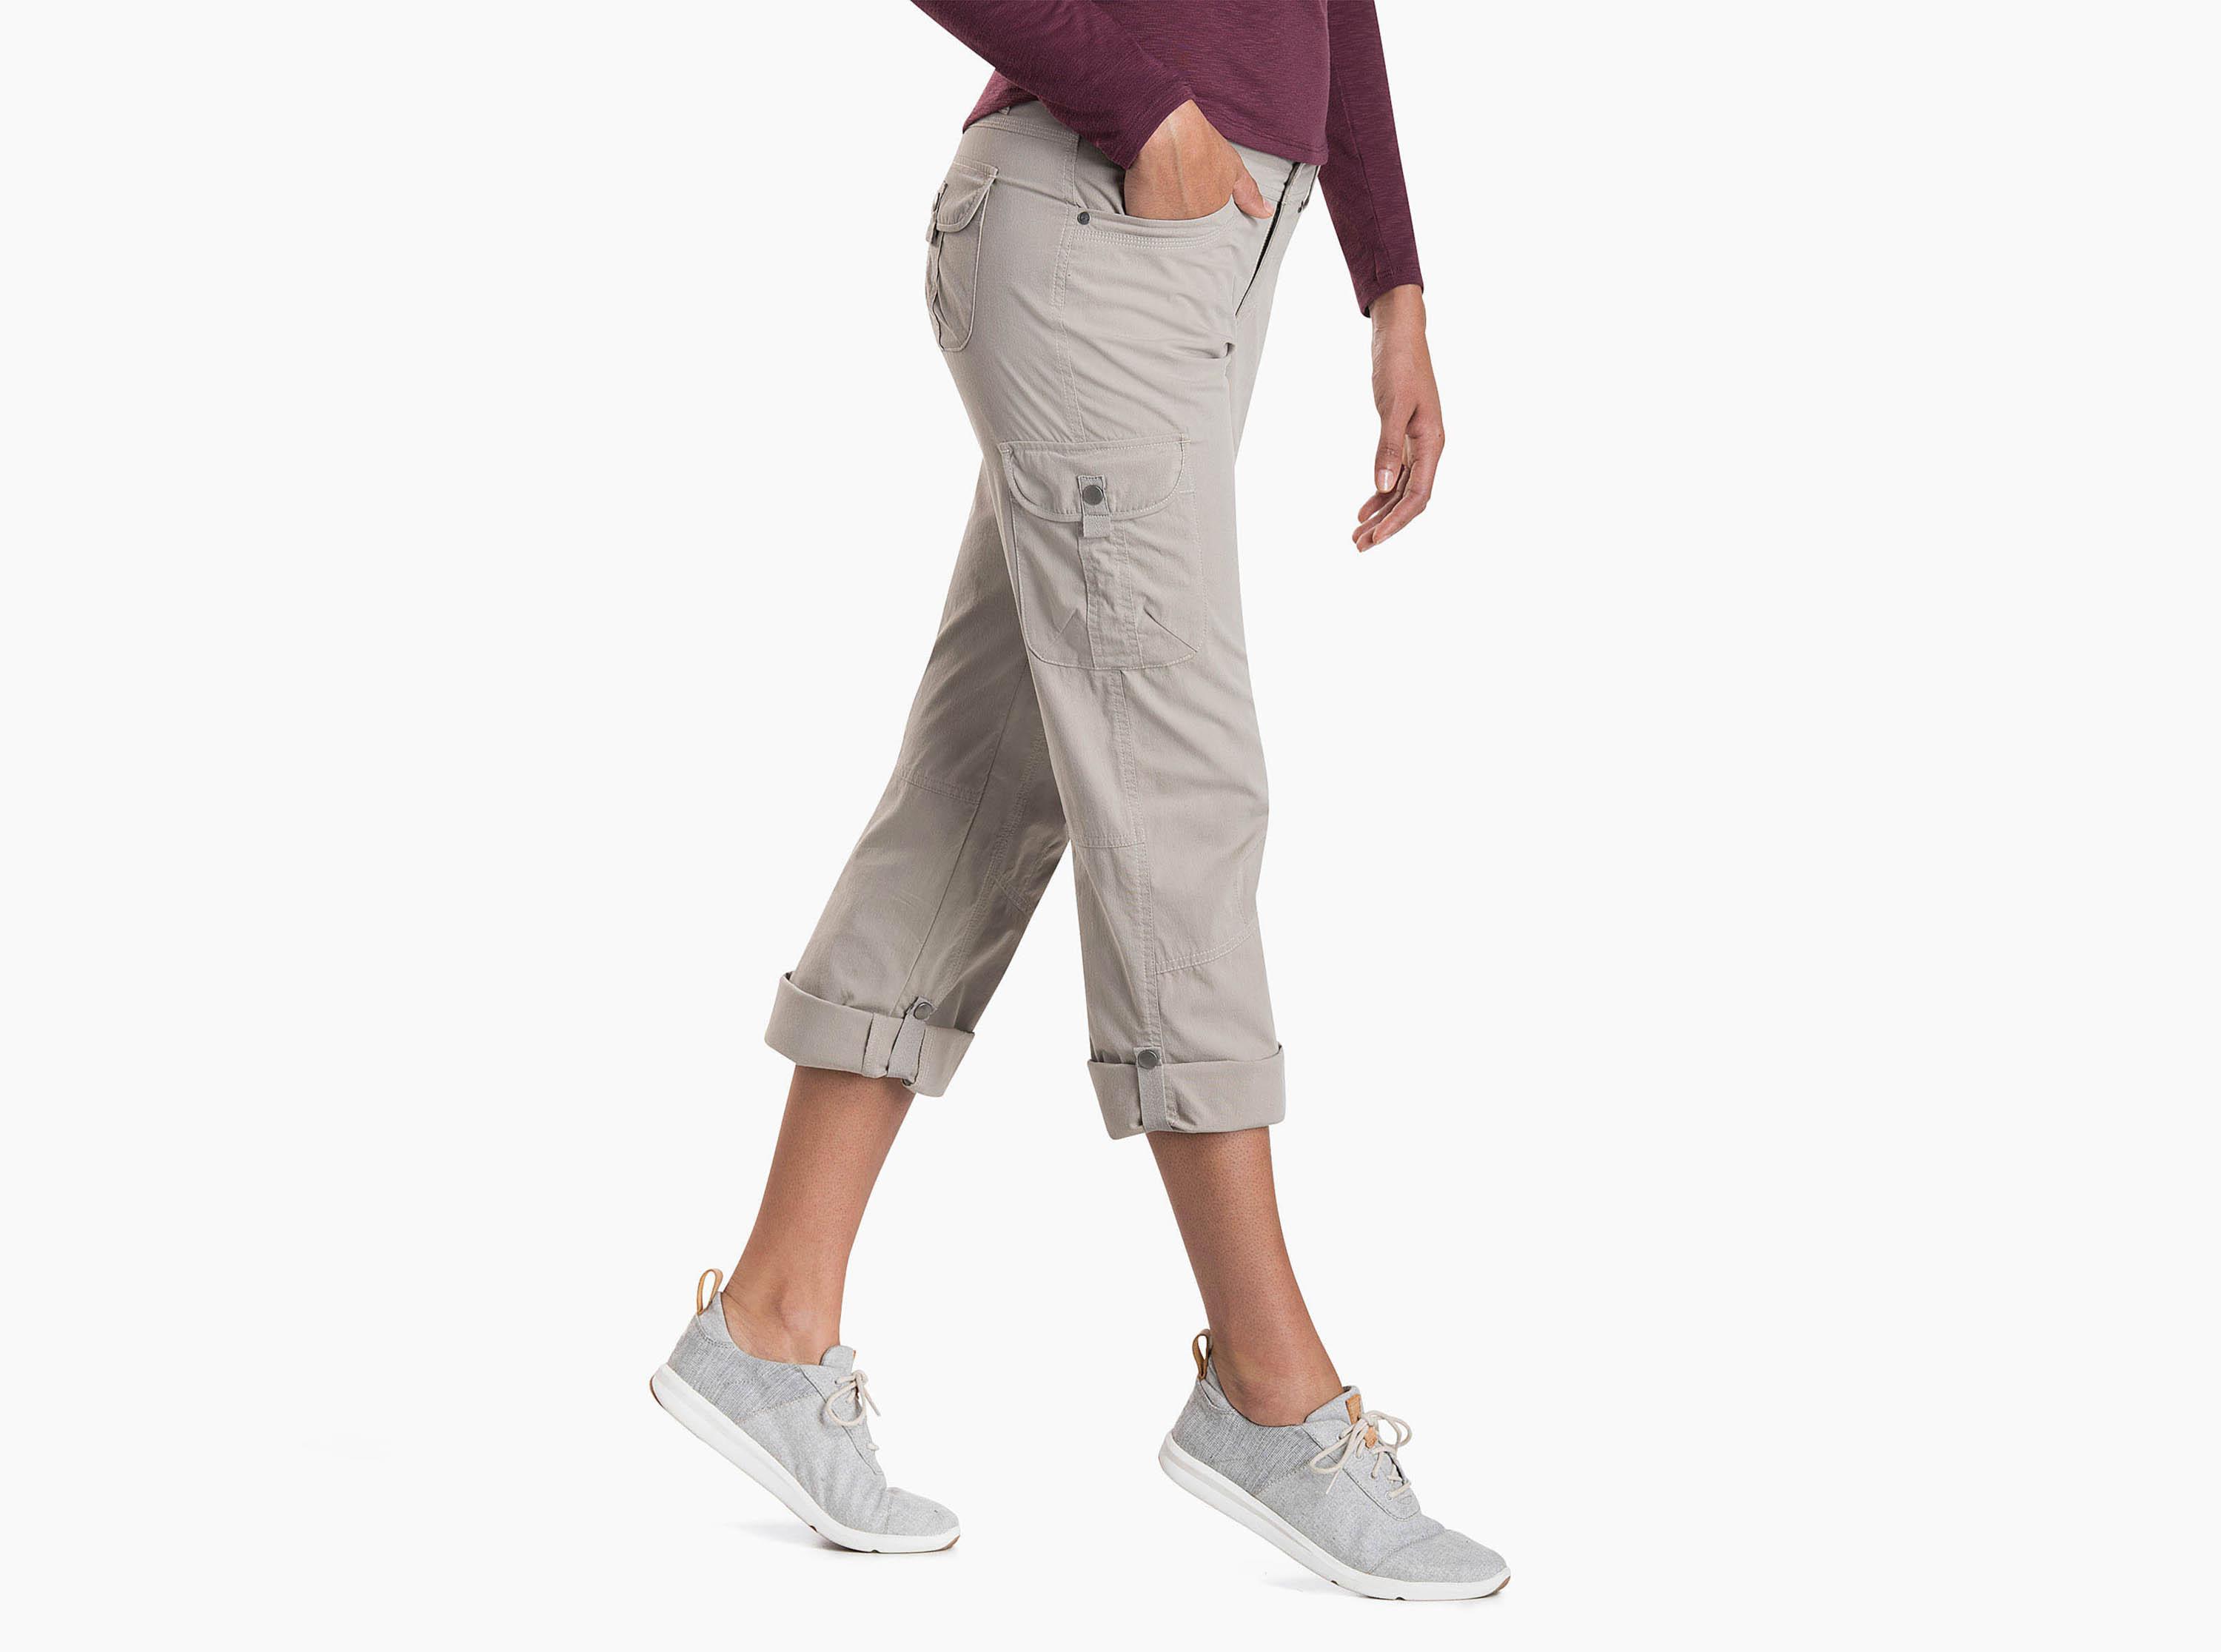 Splash™ Roll-Up Pant in Women's Pants | KÜHL Clothing